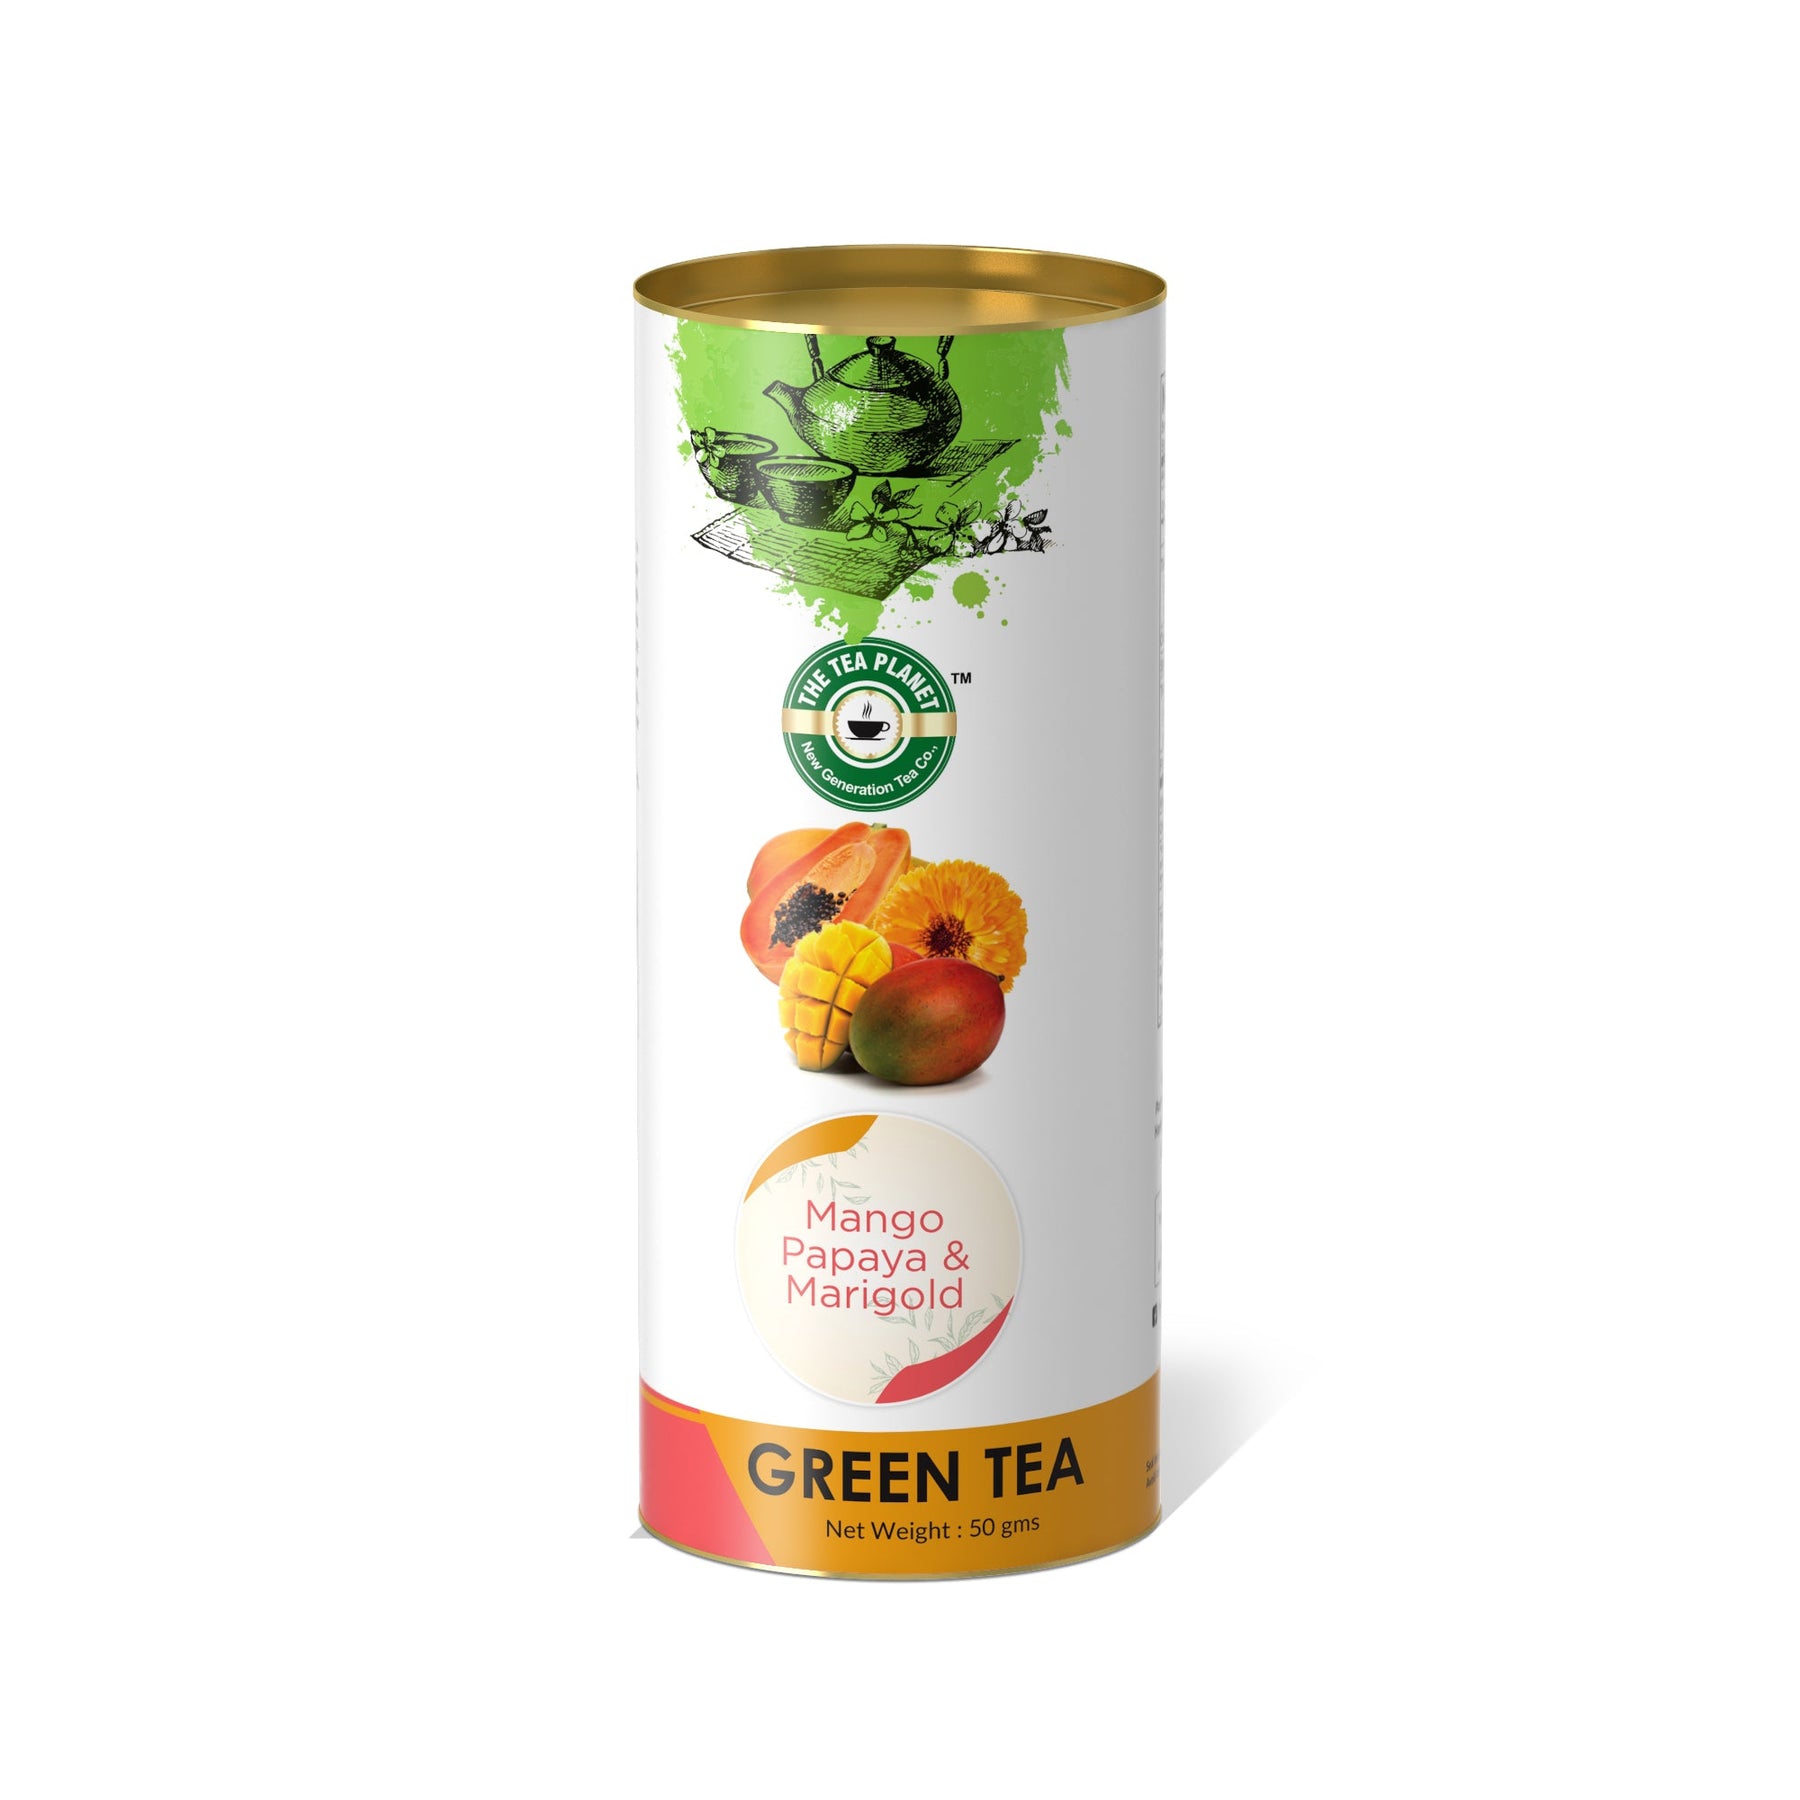 Mango, Papaya & Marigold Orthodox Tea - 50 gms